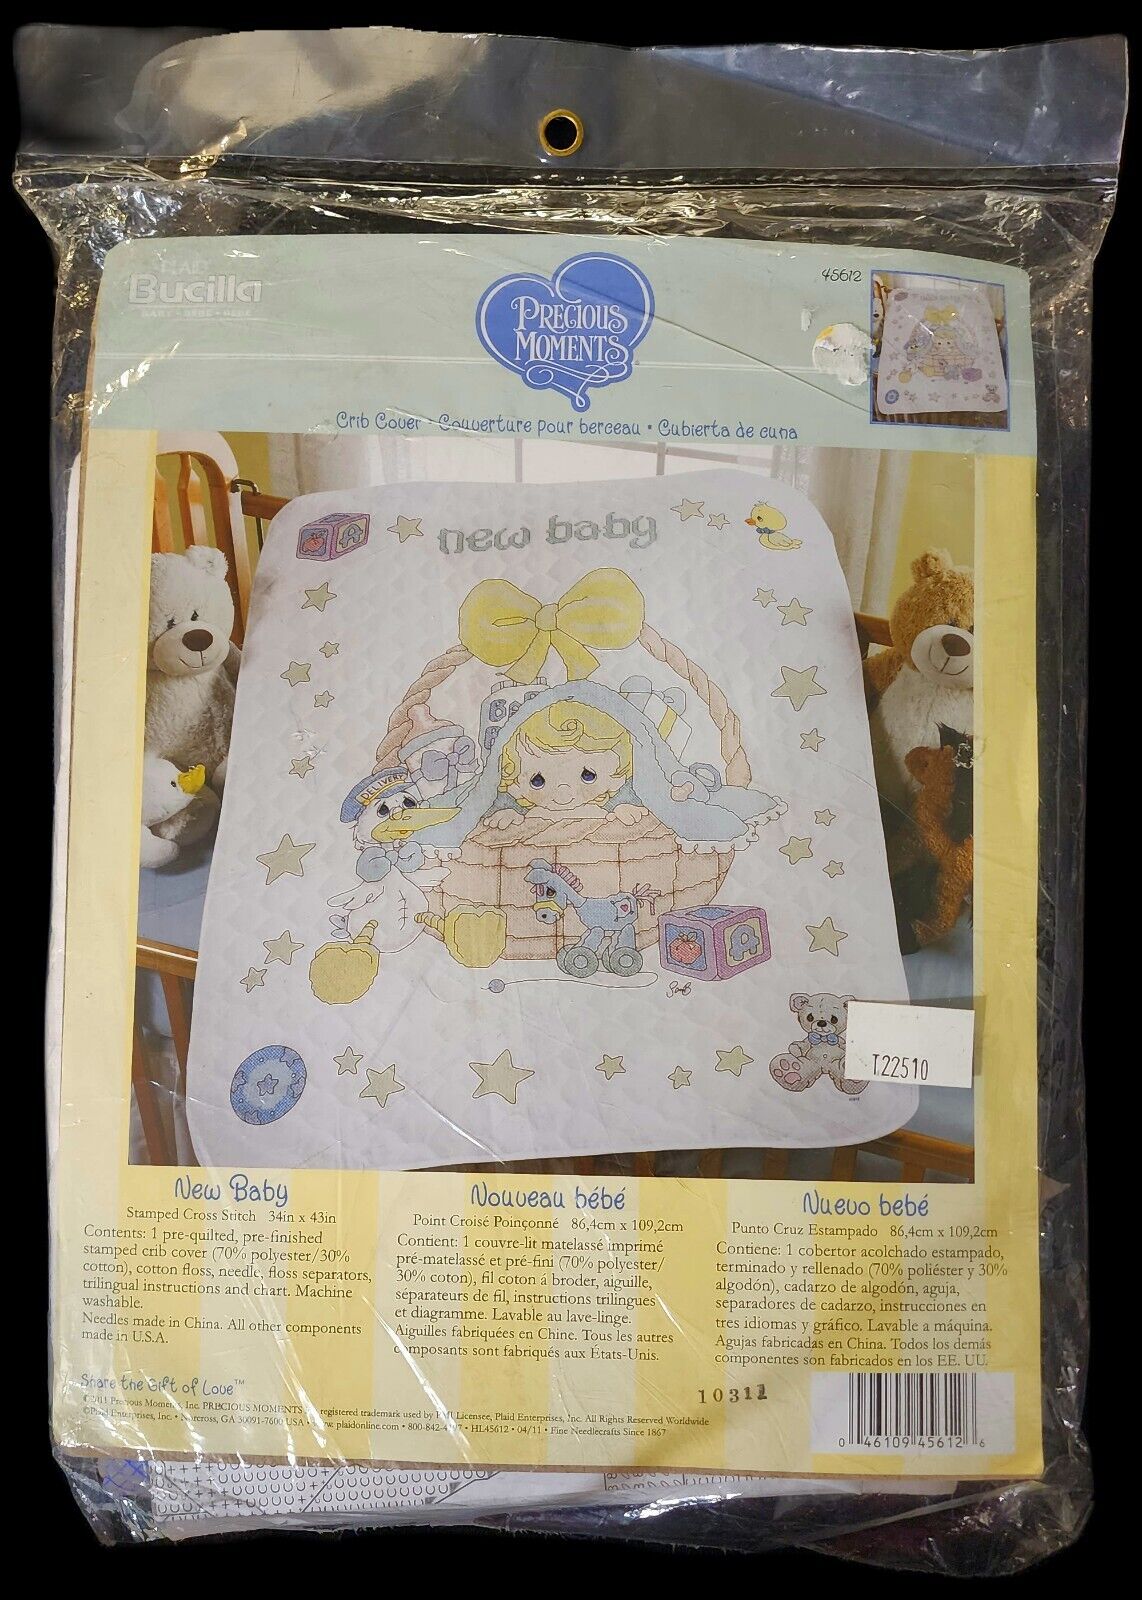 Bucilla Precious Moments New Baby Crib Cover Quilt 45612 Cross Stitch Blanket